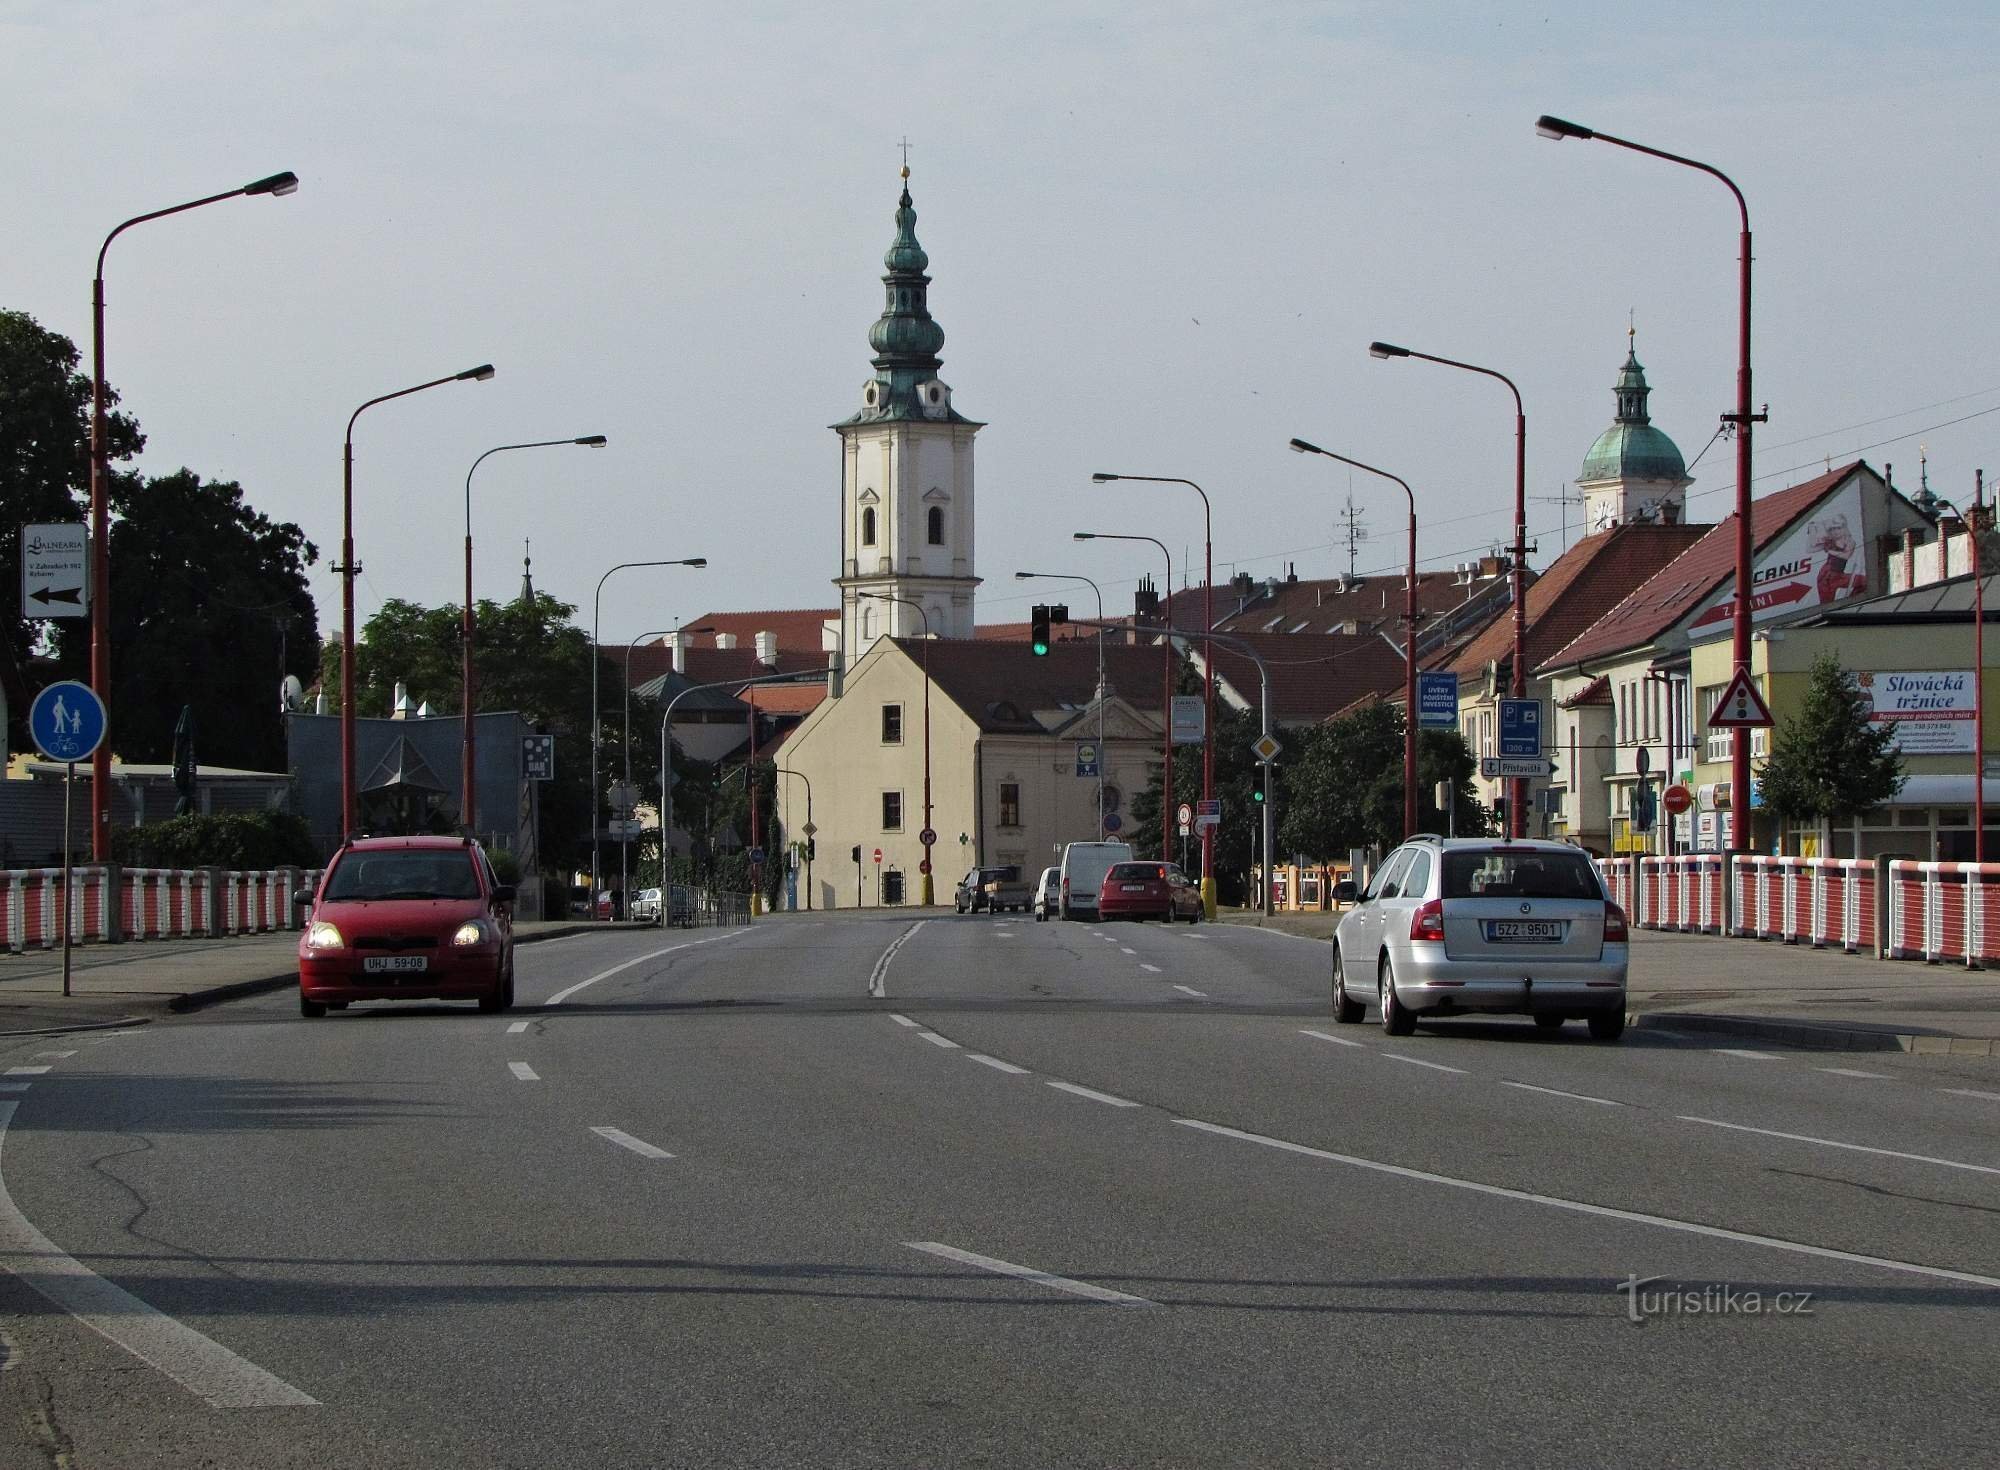 Uherské Hradiště - fransiskaaniluostarin ja kirkon alue